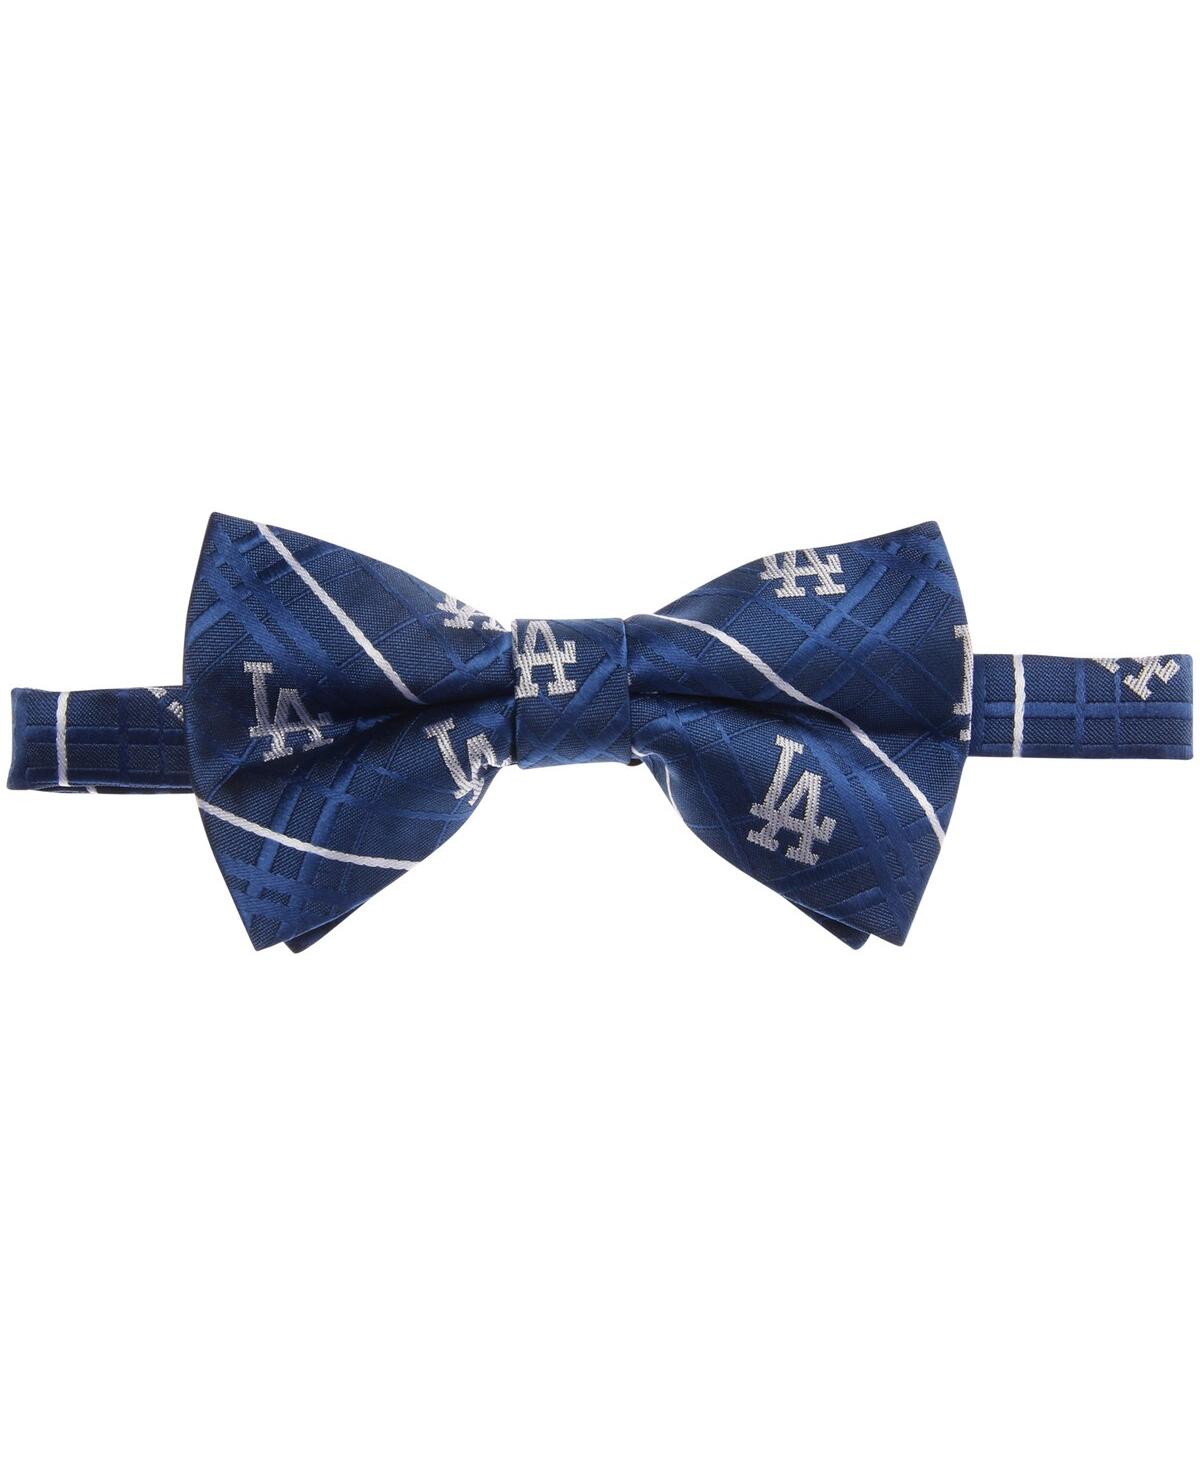 Men's Royal Los Angeles Dodgers Oxford Bow Tie - Royal